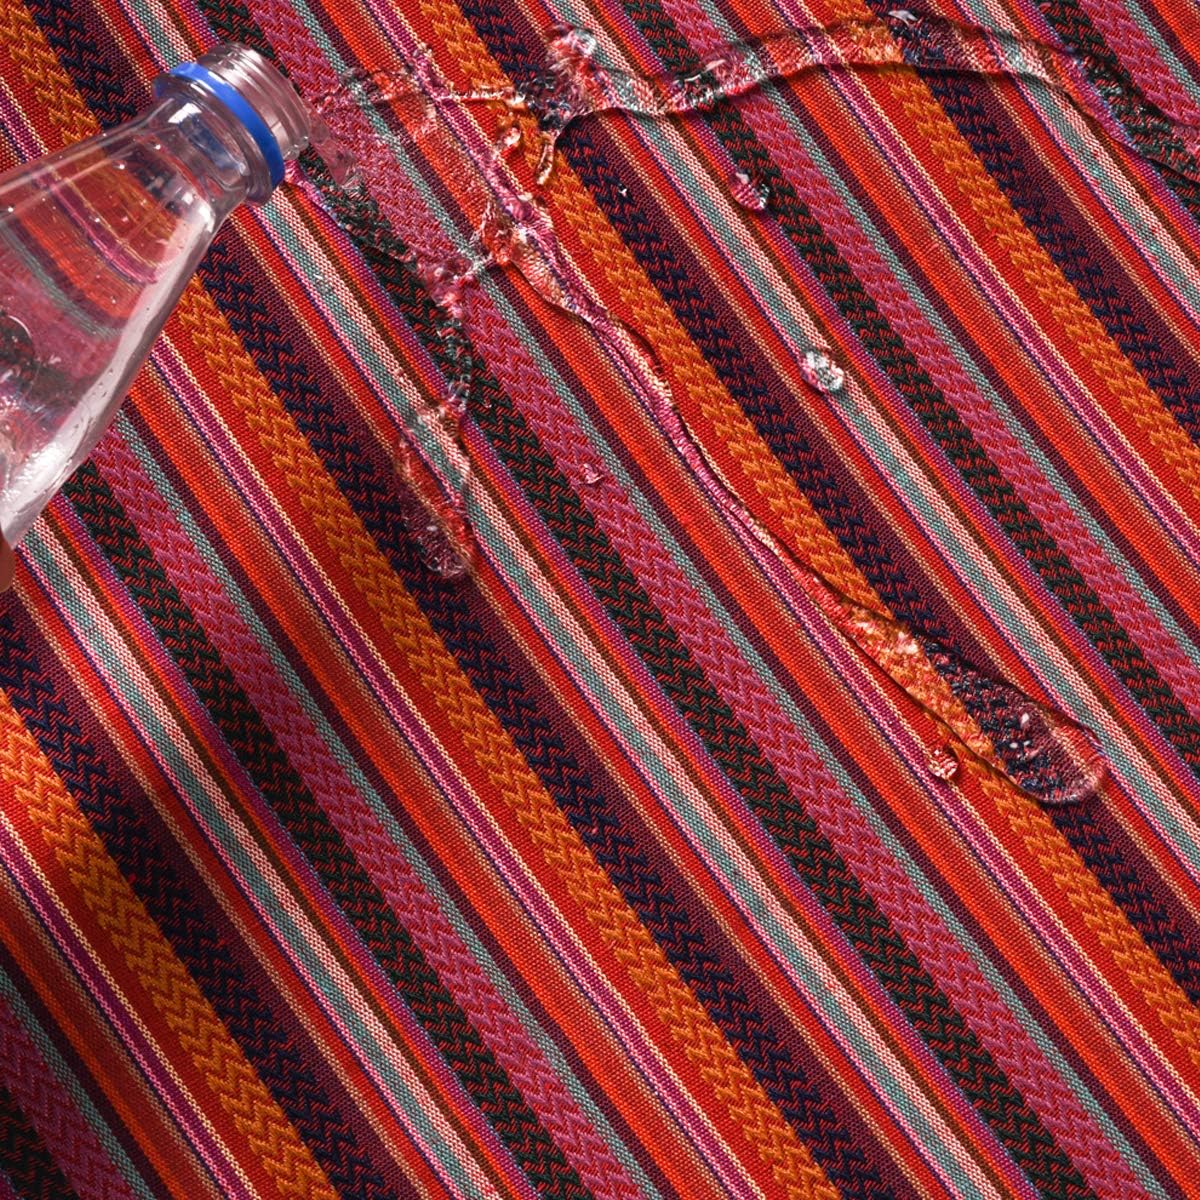 CAR PASS Universal Fit Ethnic Baja Saddle Blanket Boho Paisley Stripes Style Waterproof Car Floor Mats Set of 4 Pieces, Fit for Suvs,Vans,Sedans,Trucks (Purple)